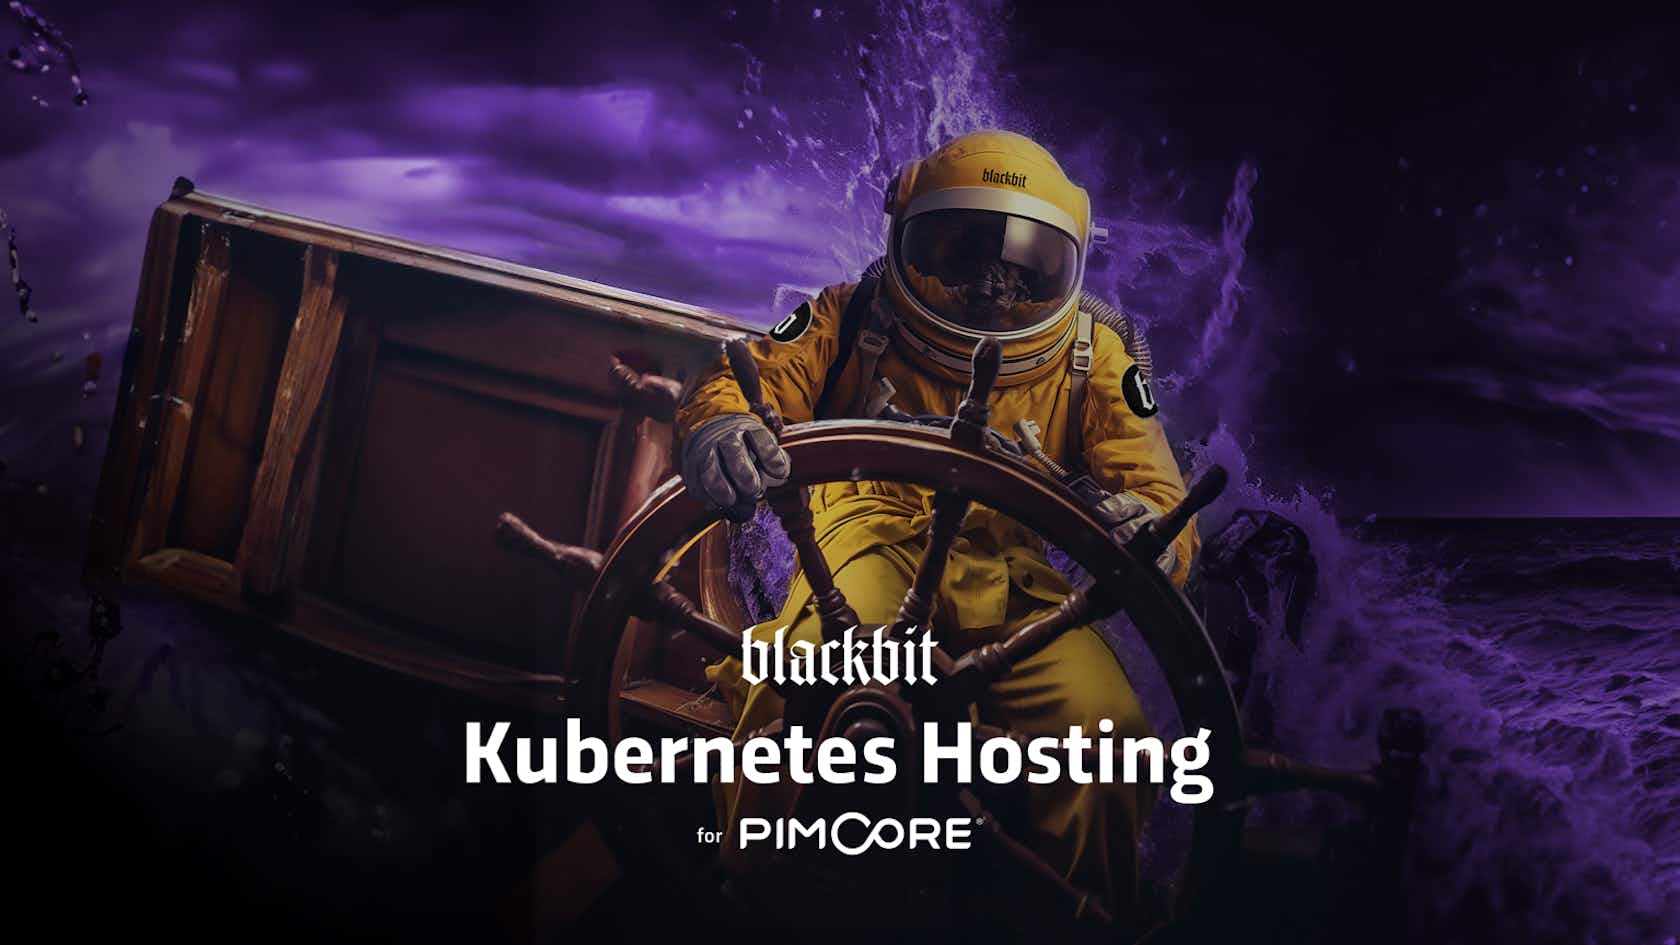 Blackbit Kubernetes Hosting banner image